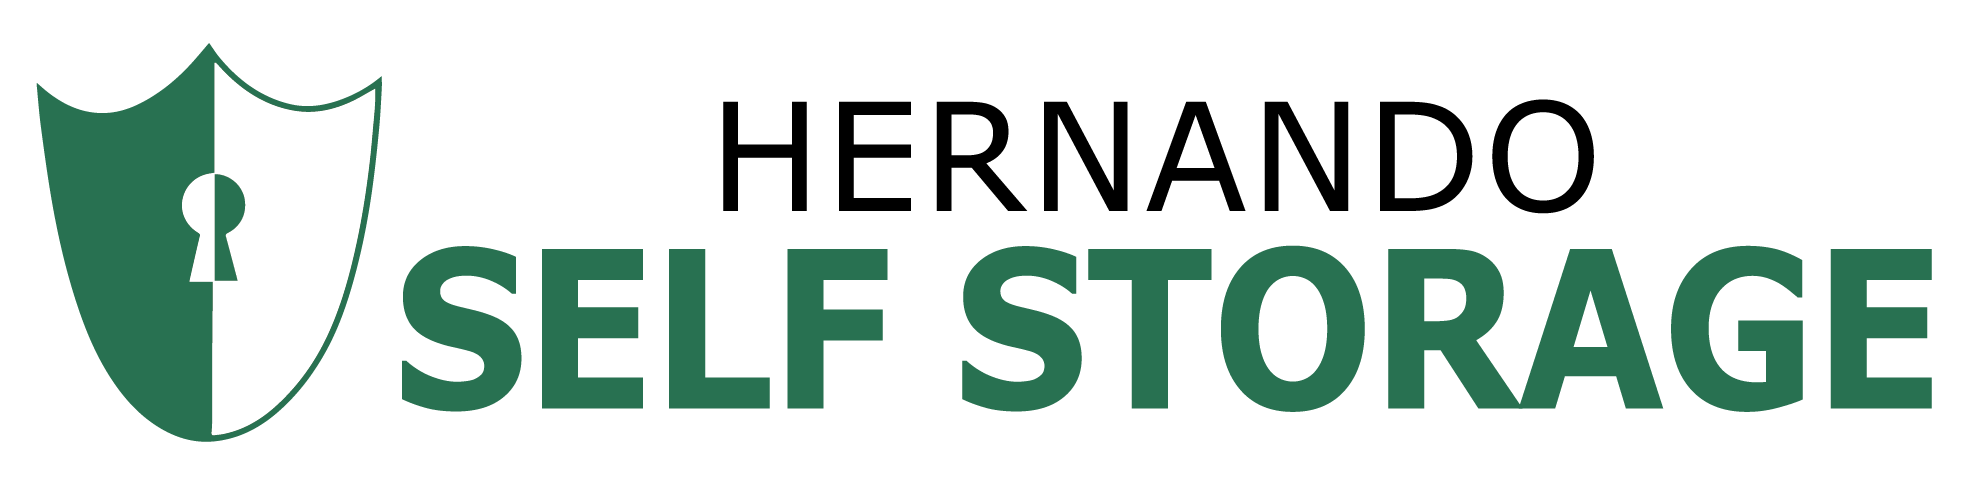 Hernando Self Storage Logo